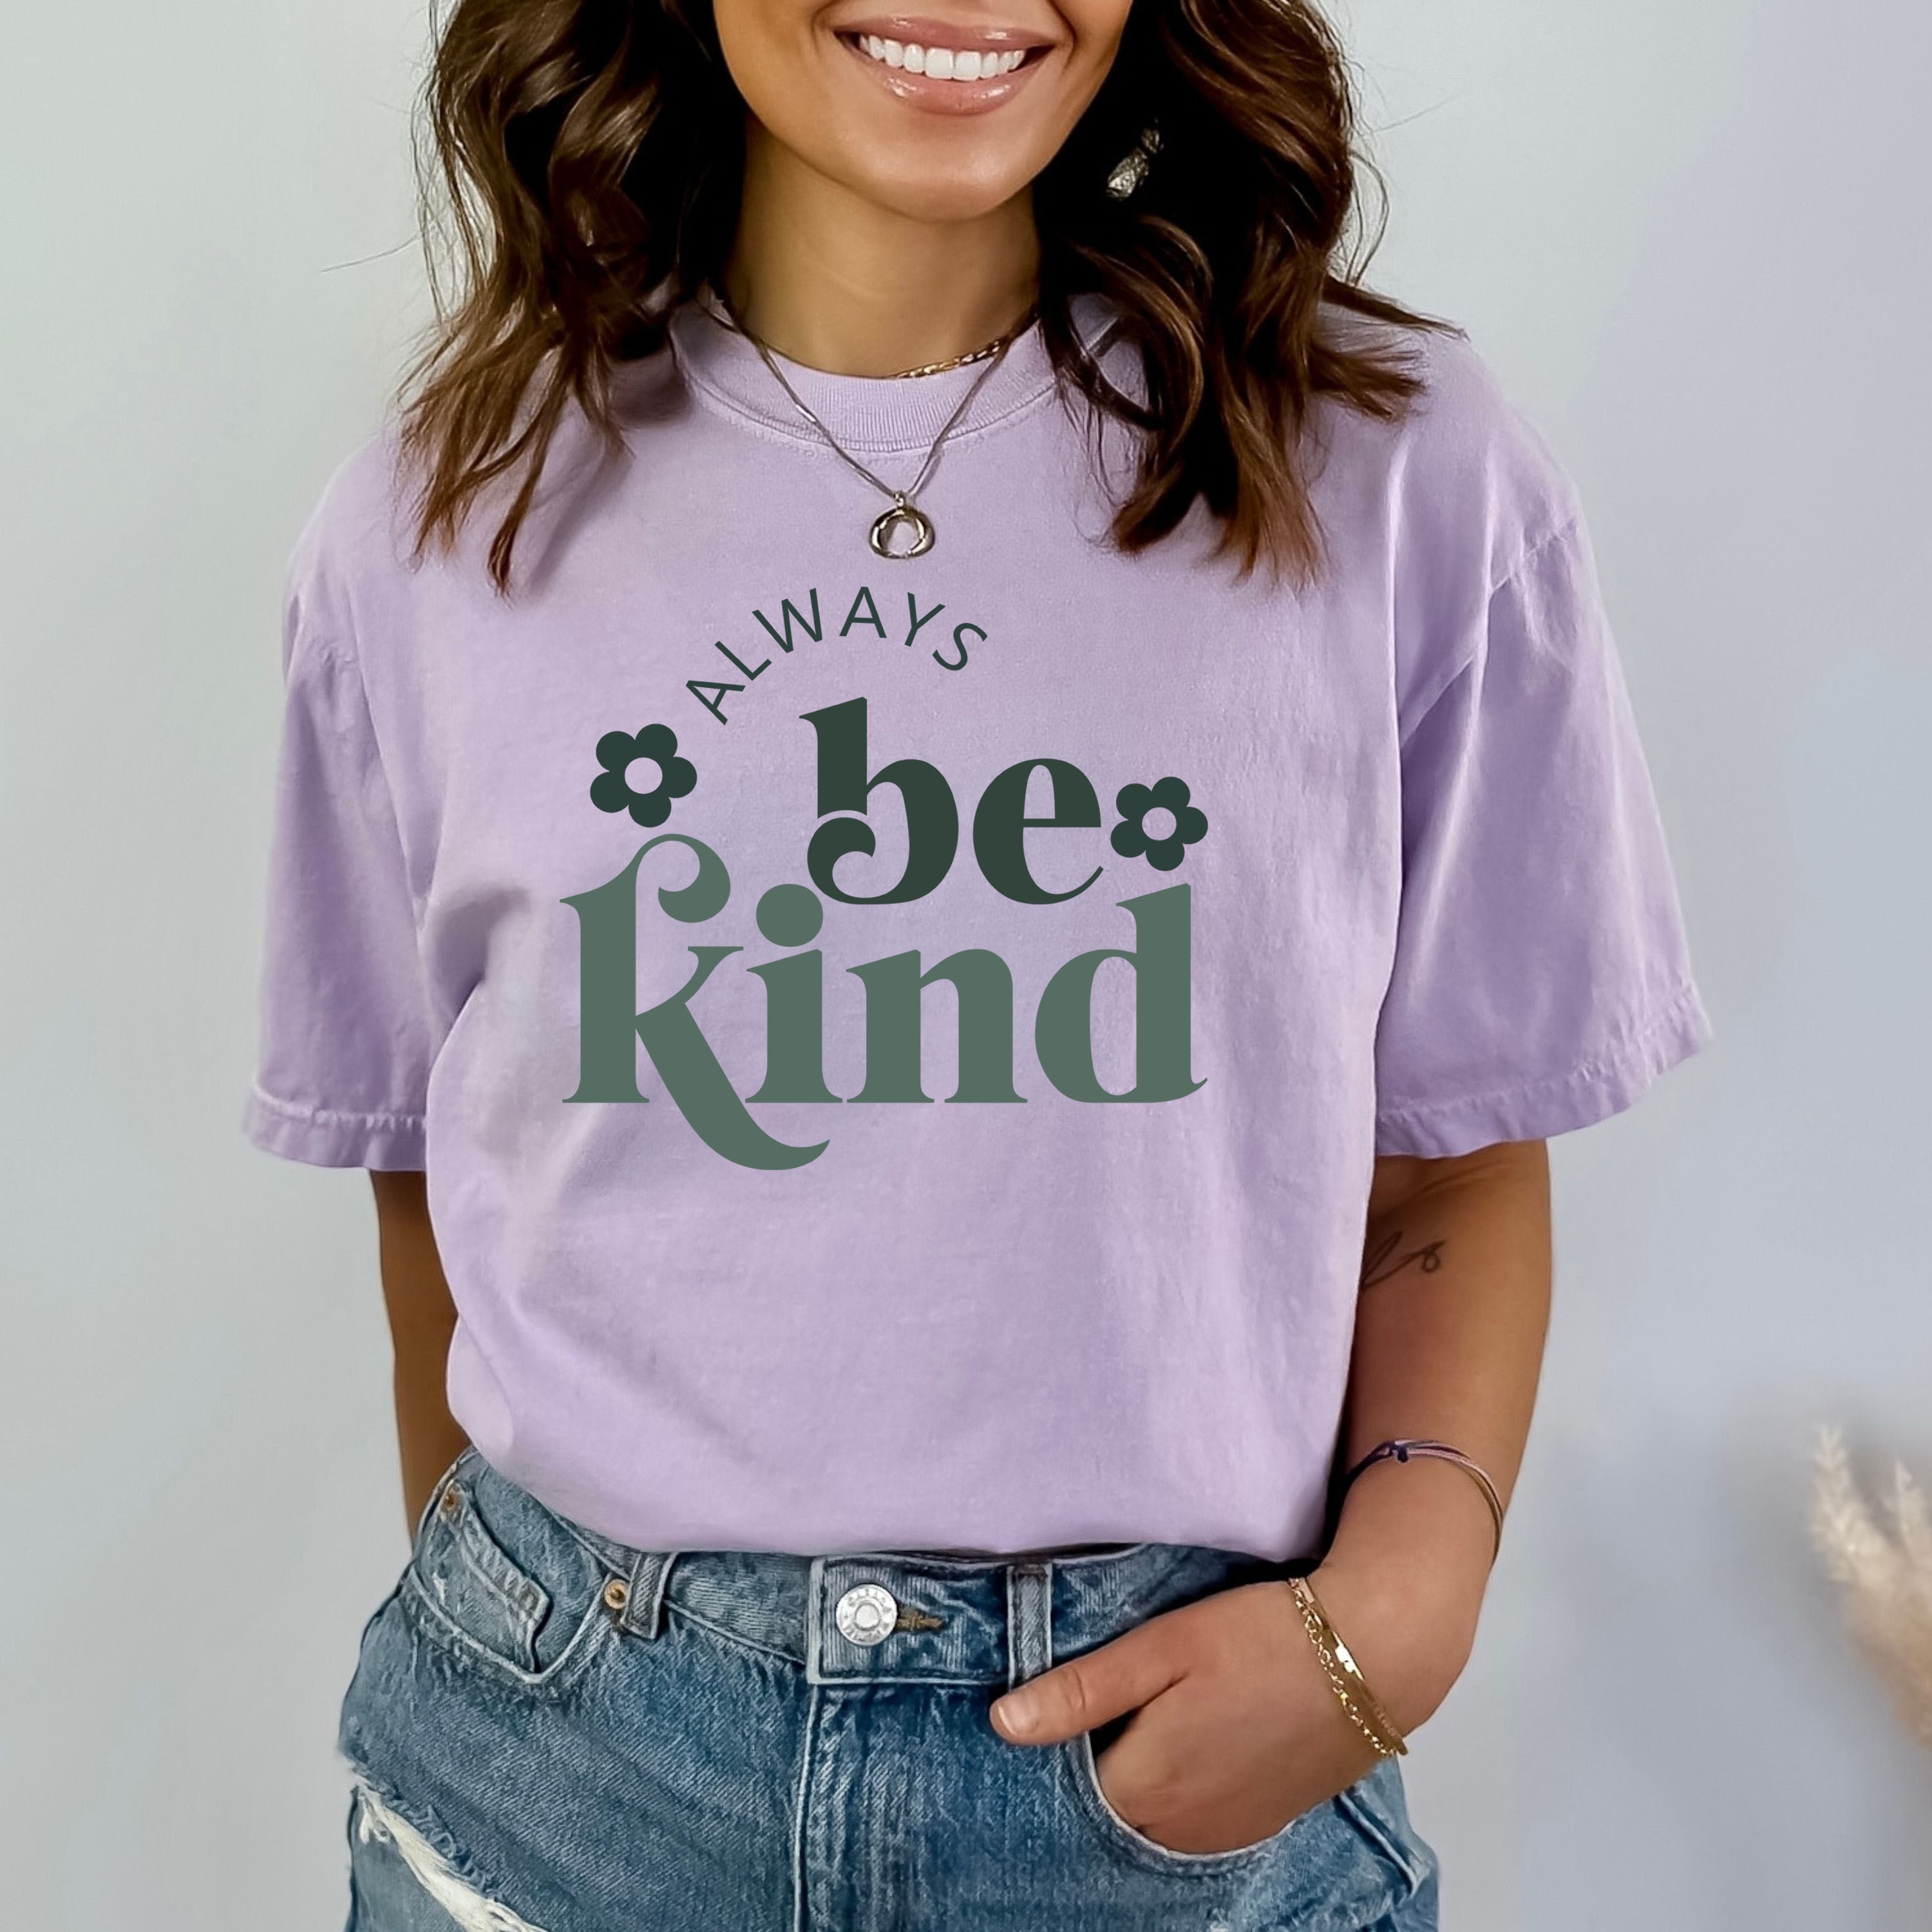 Always be kind - Bella canvas